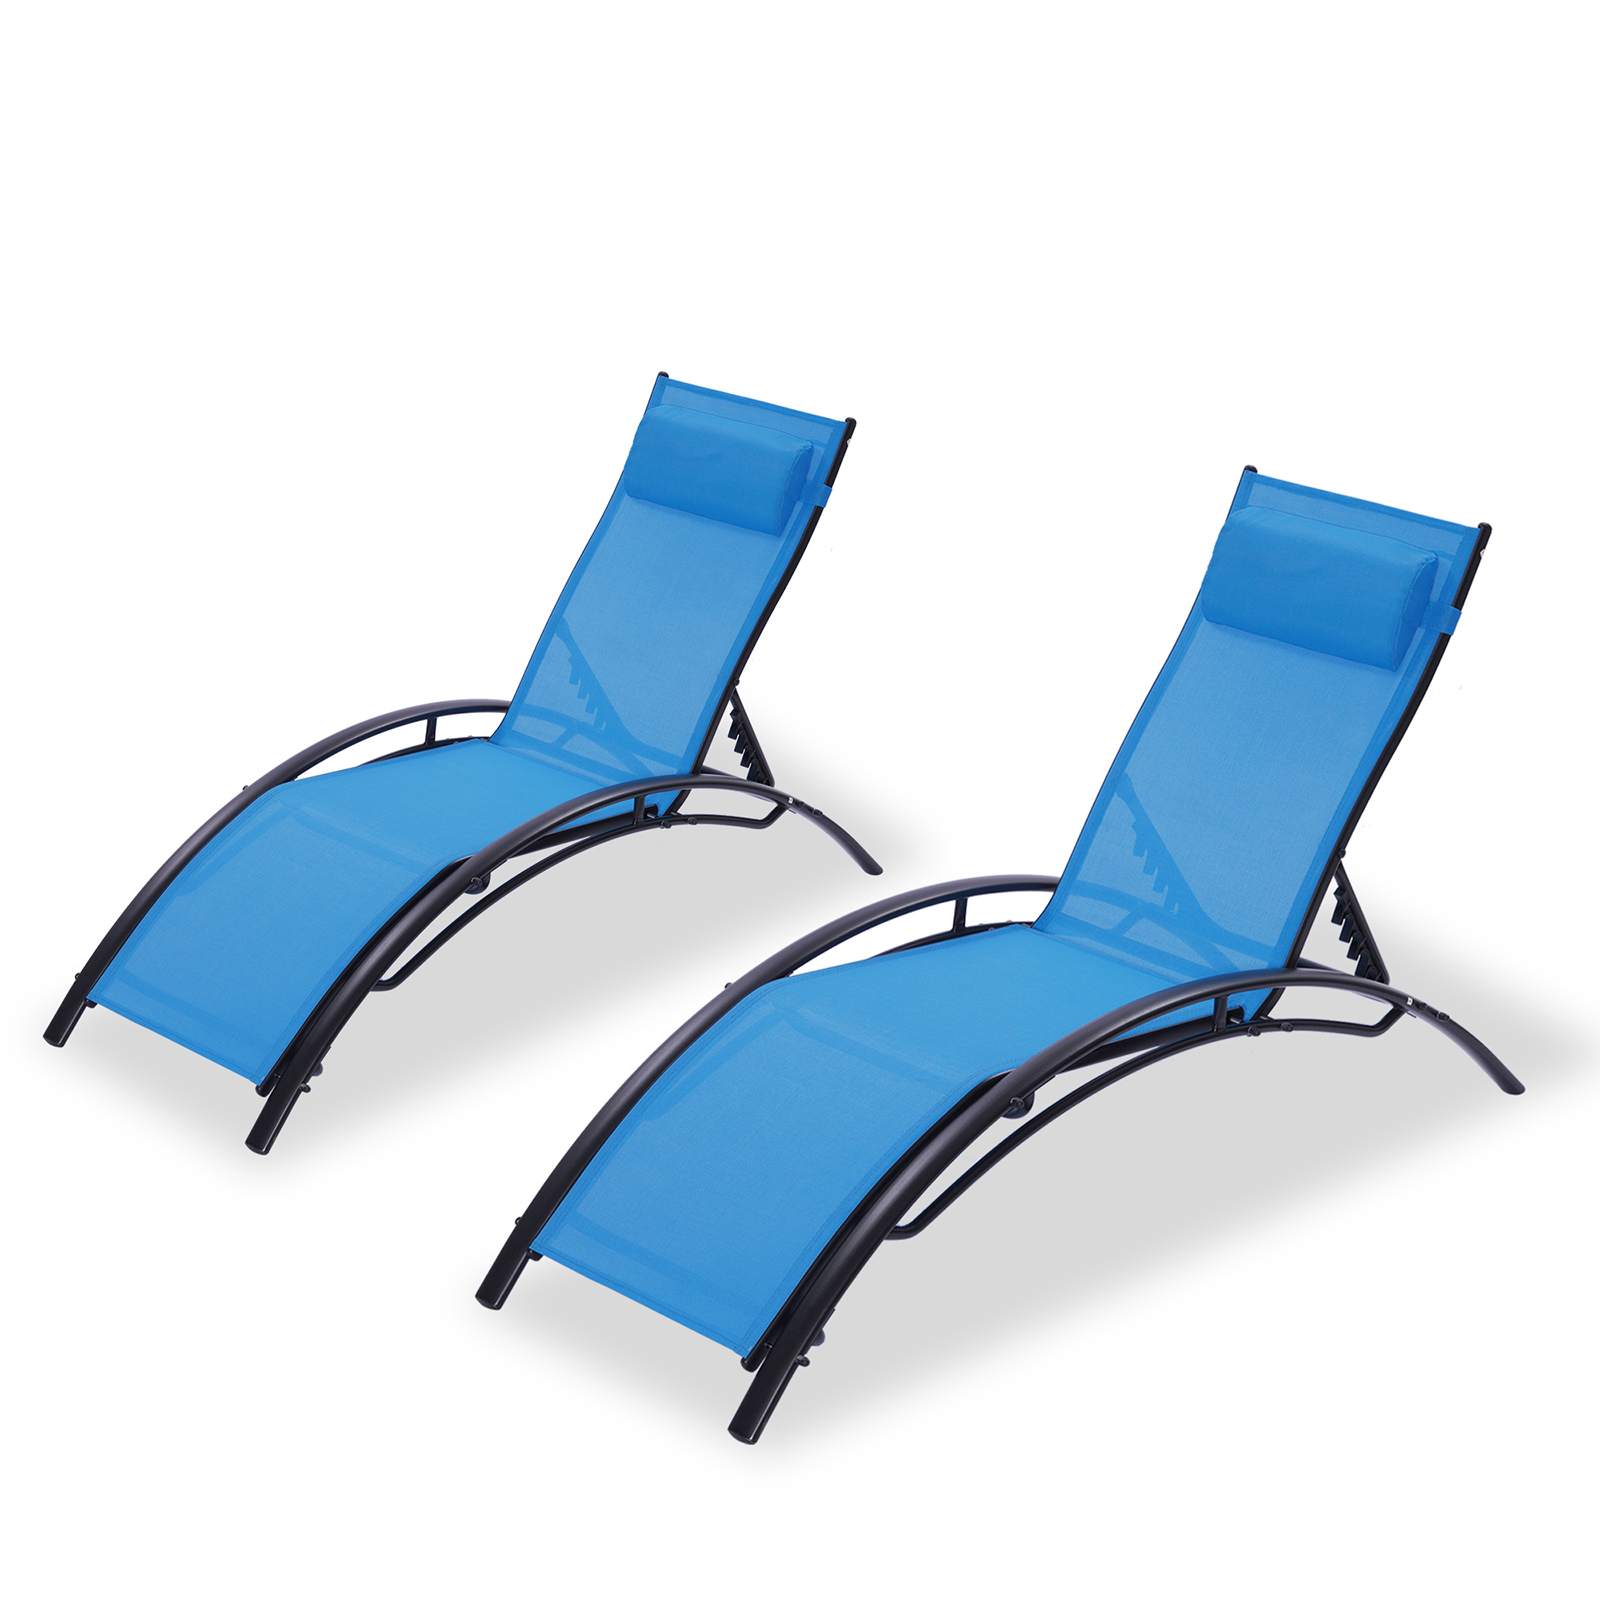 Hassch 2PCS Outdoor Chaise Lounges Aluminum Recliner Chair Beach Sun Chair, Blue - image 1 of 10